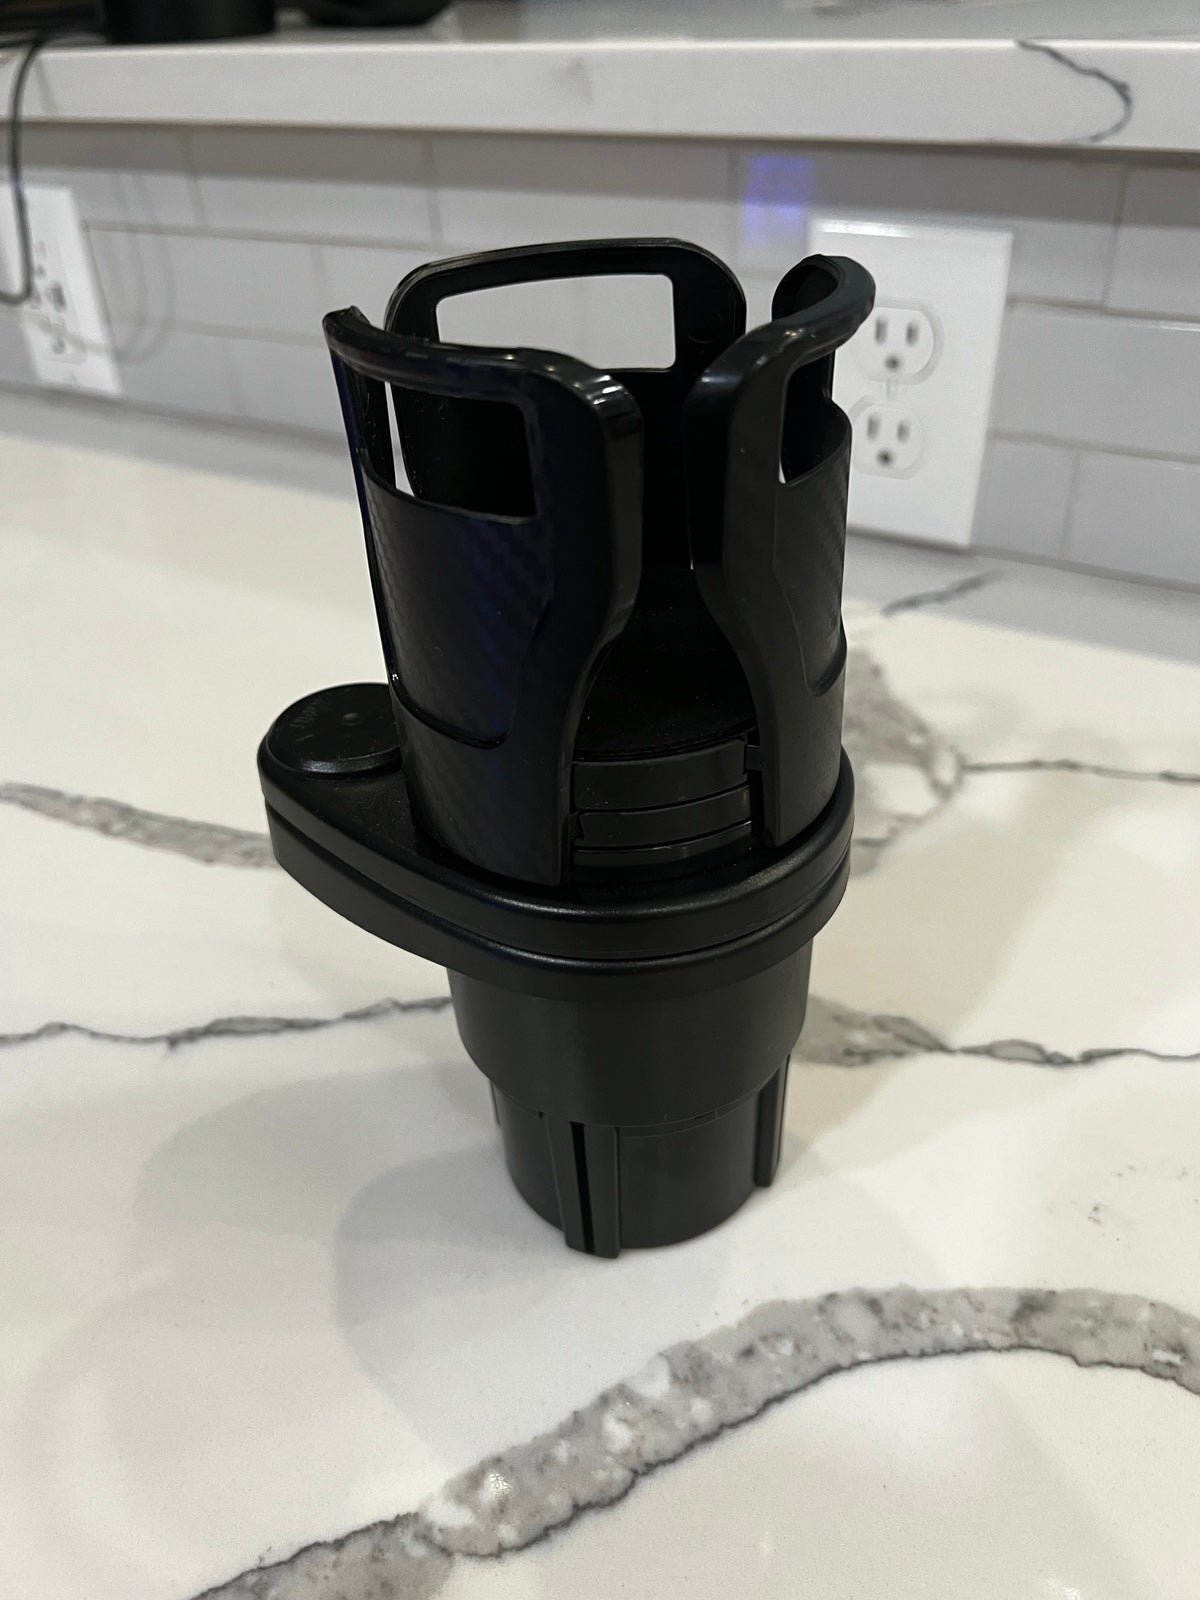 Universal Car Cup Holder Adjustable One Point Drink Phone Bottle Holders Black B6bLPfnAH